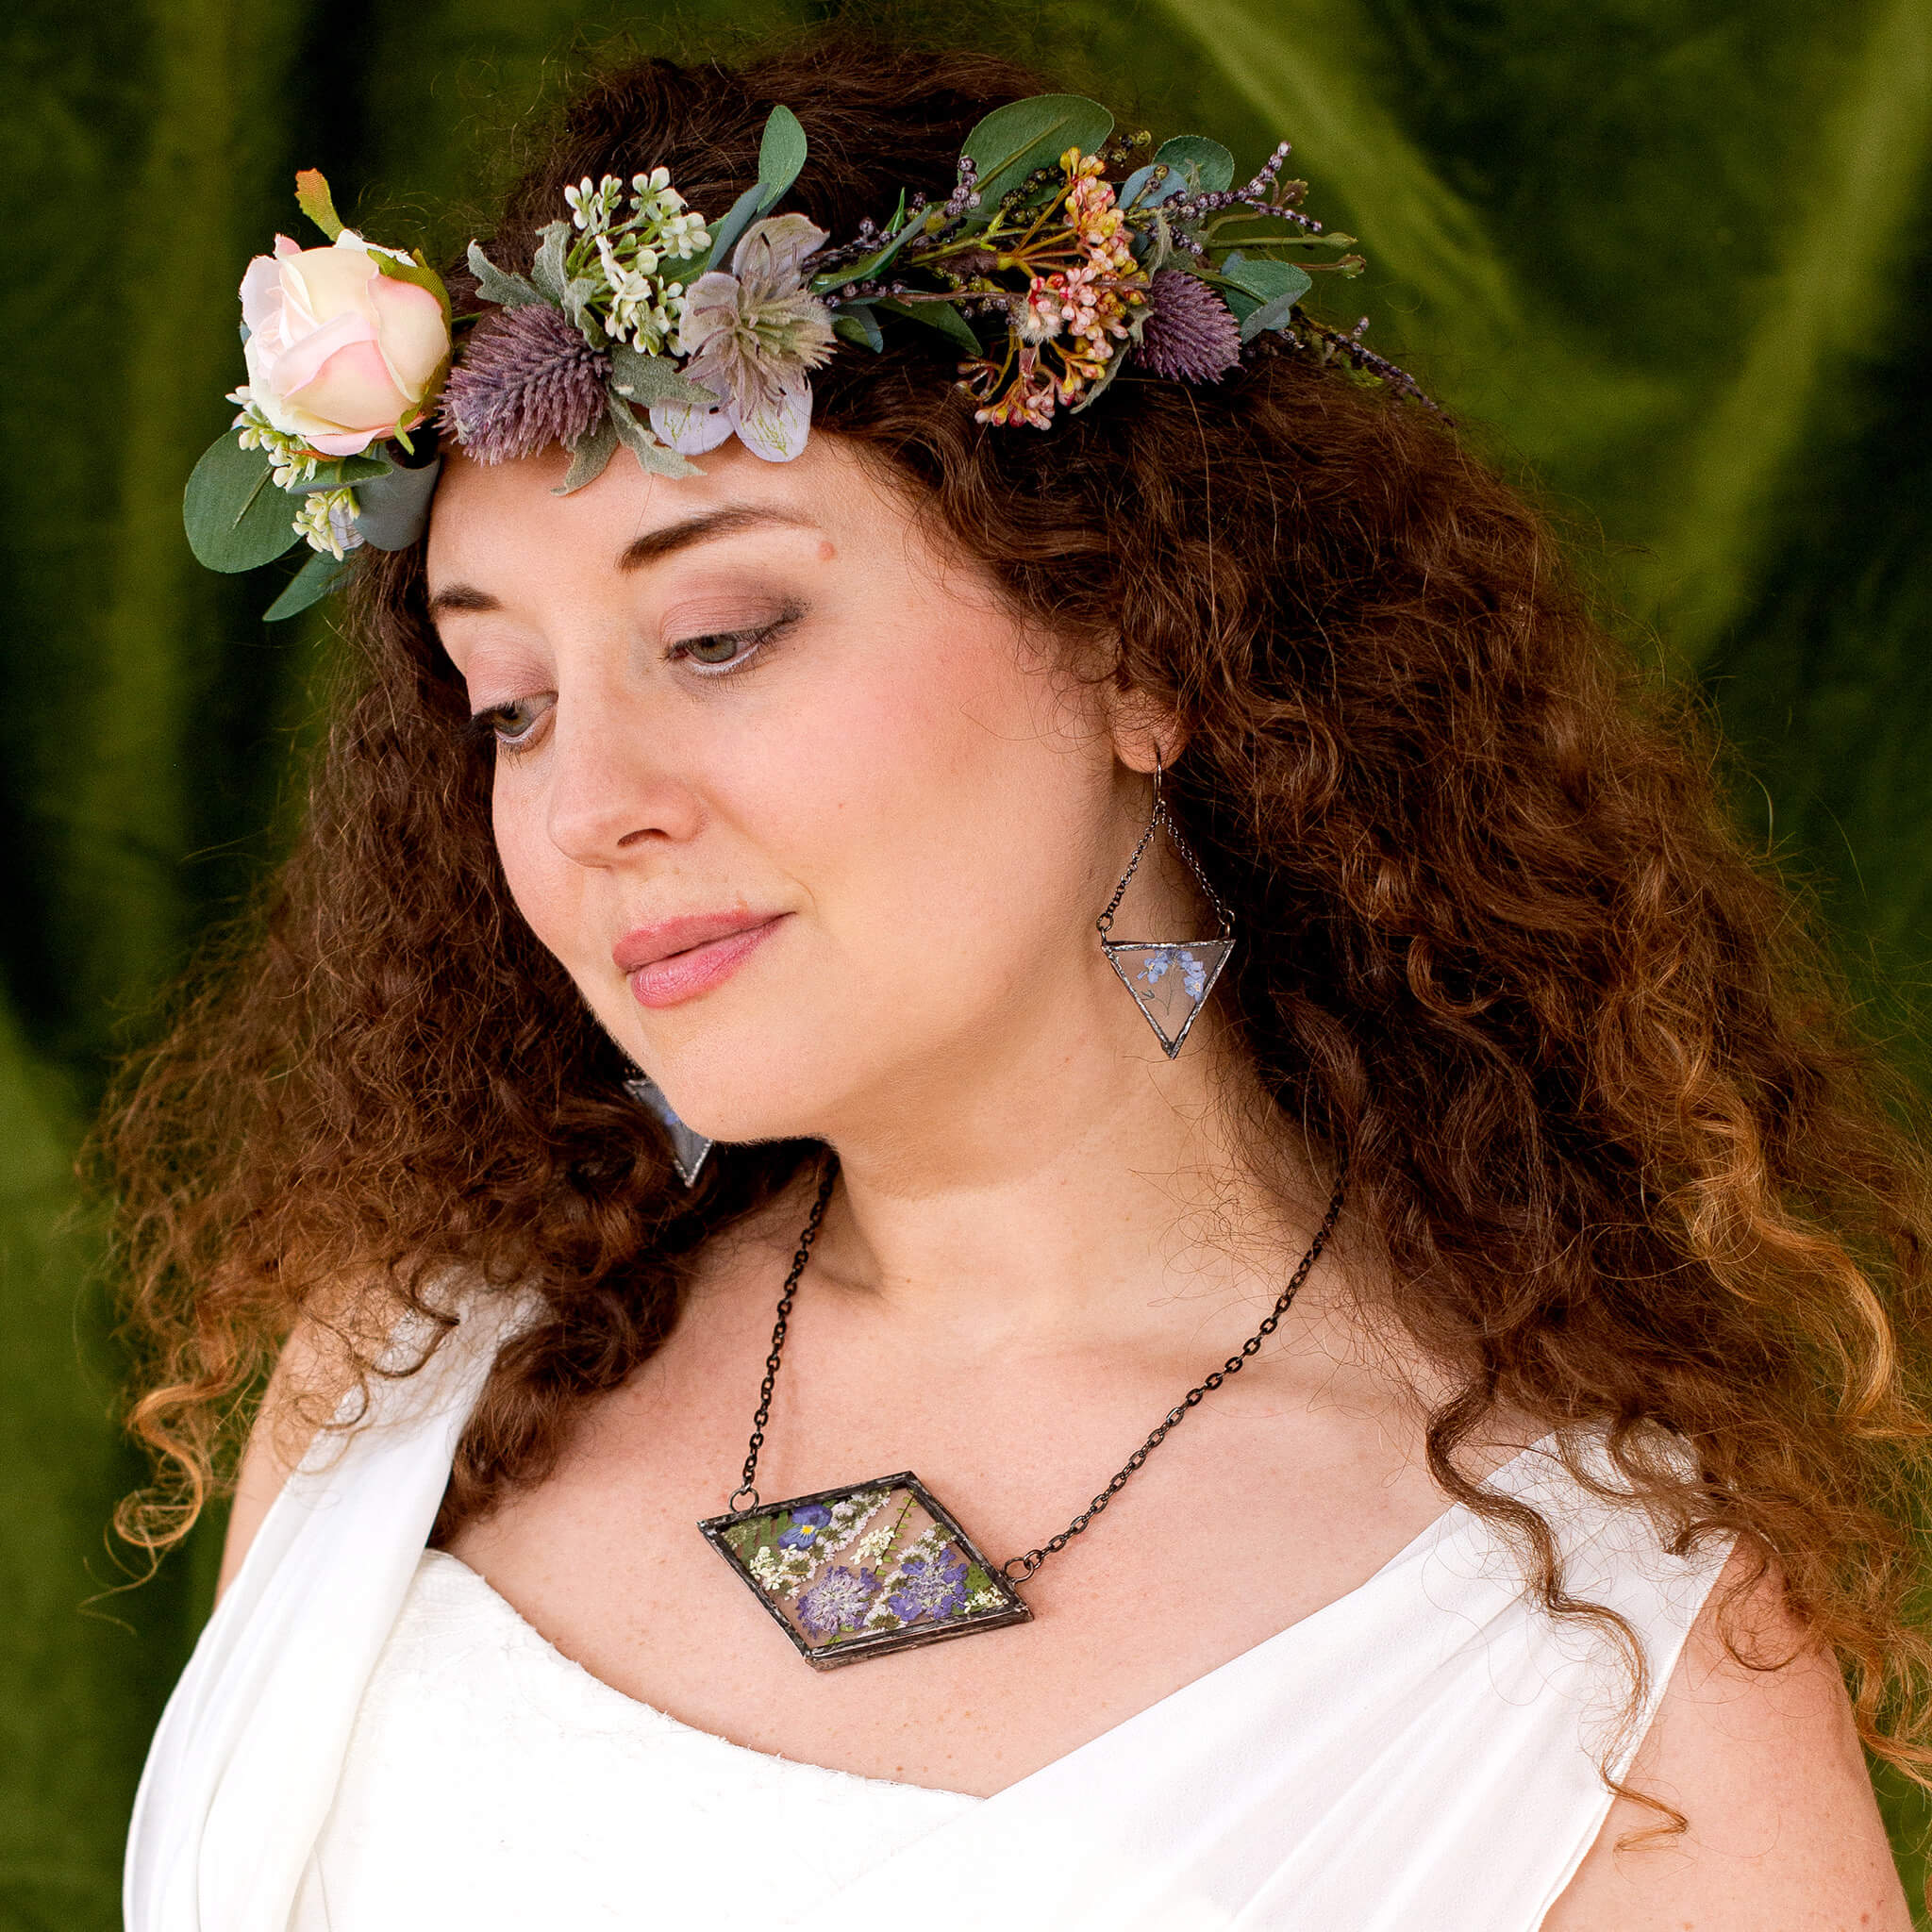 Brunette in white dress and flower crown wearing rhomboidal Purple pressed flower necklace